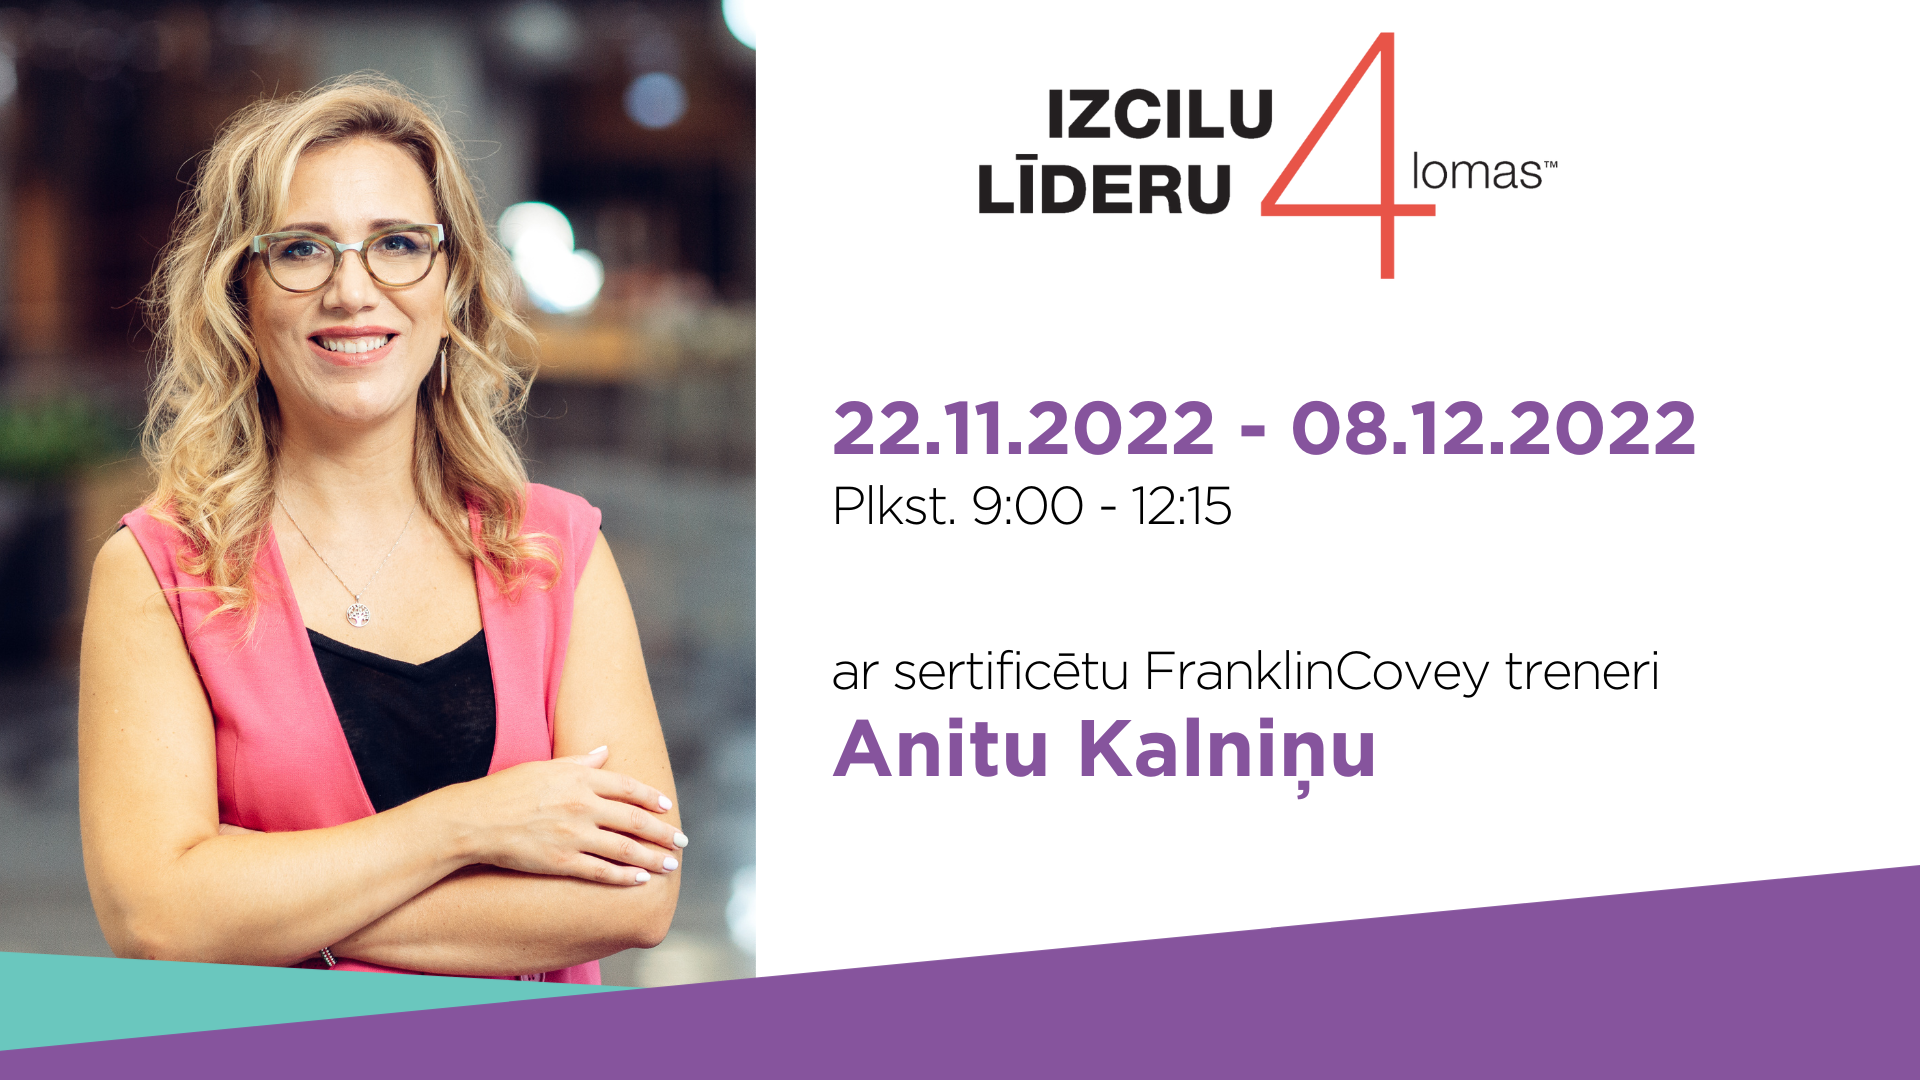 Izcilu-lideru-4-lomas_Anita-Kalnina_FranklinCovey-Latvia